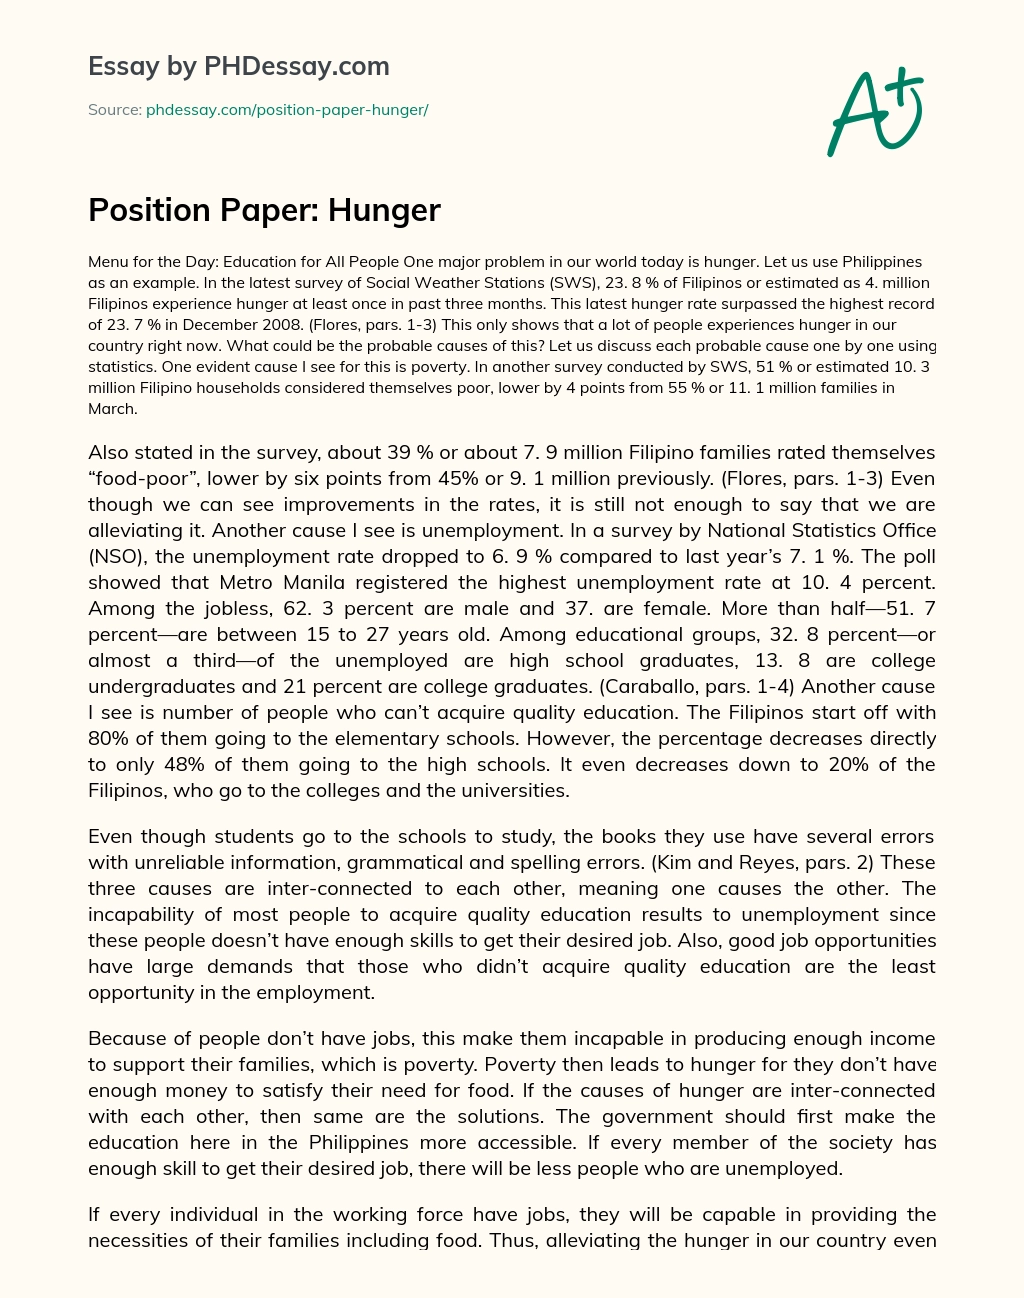 Position Paper: Hunger essay